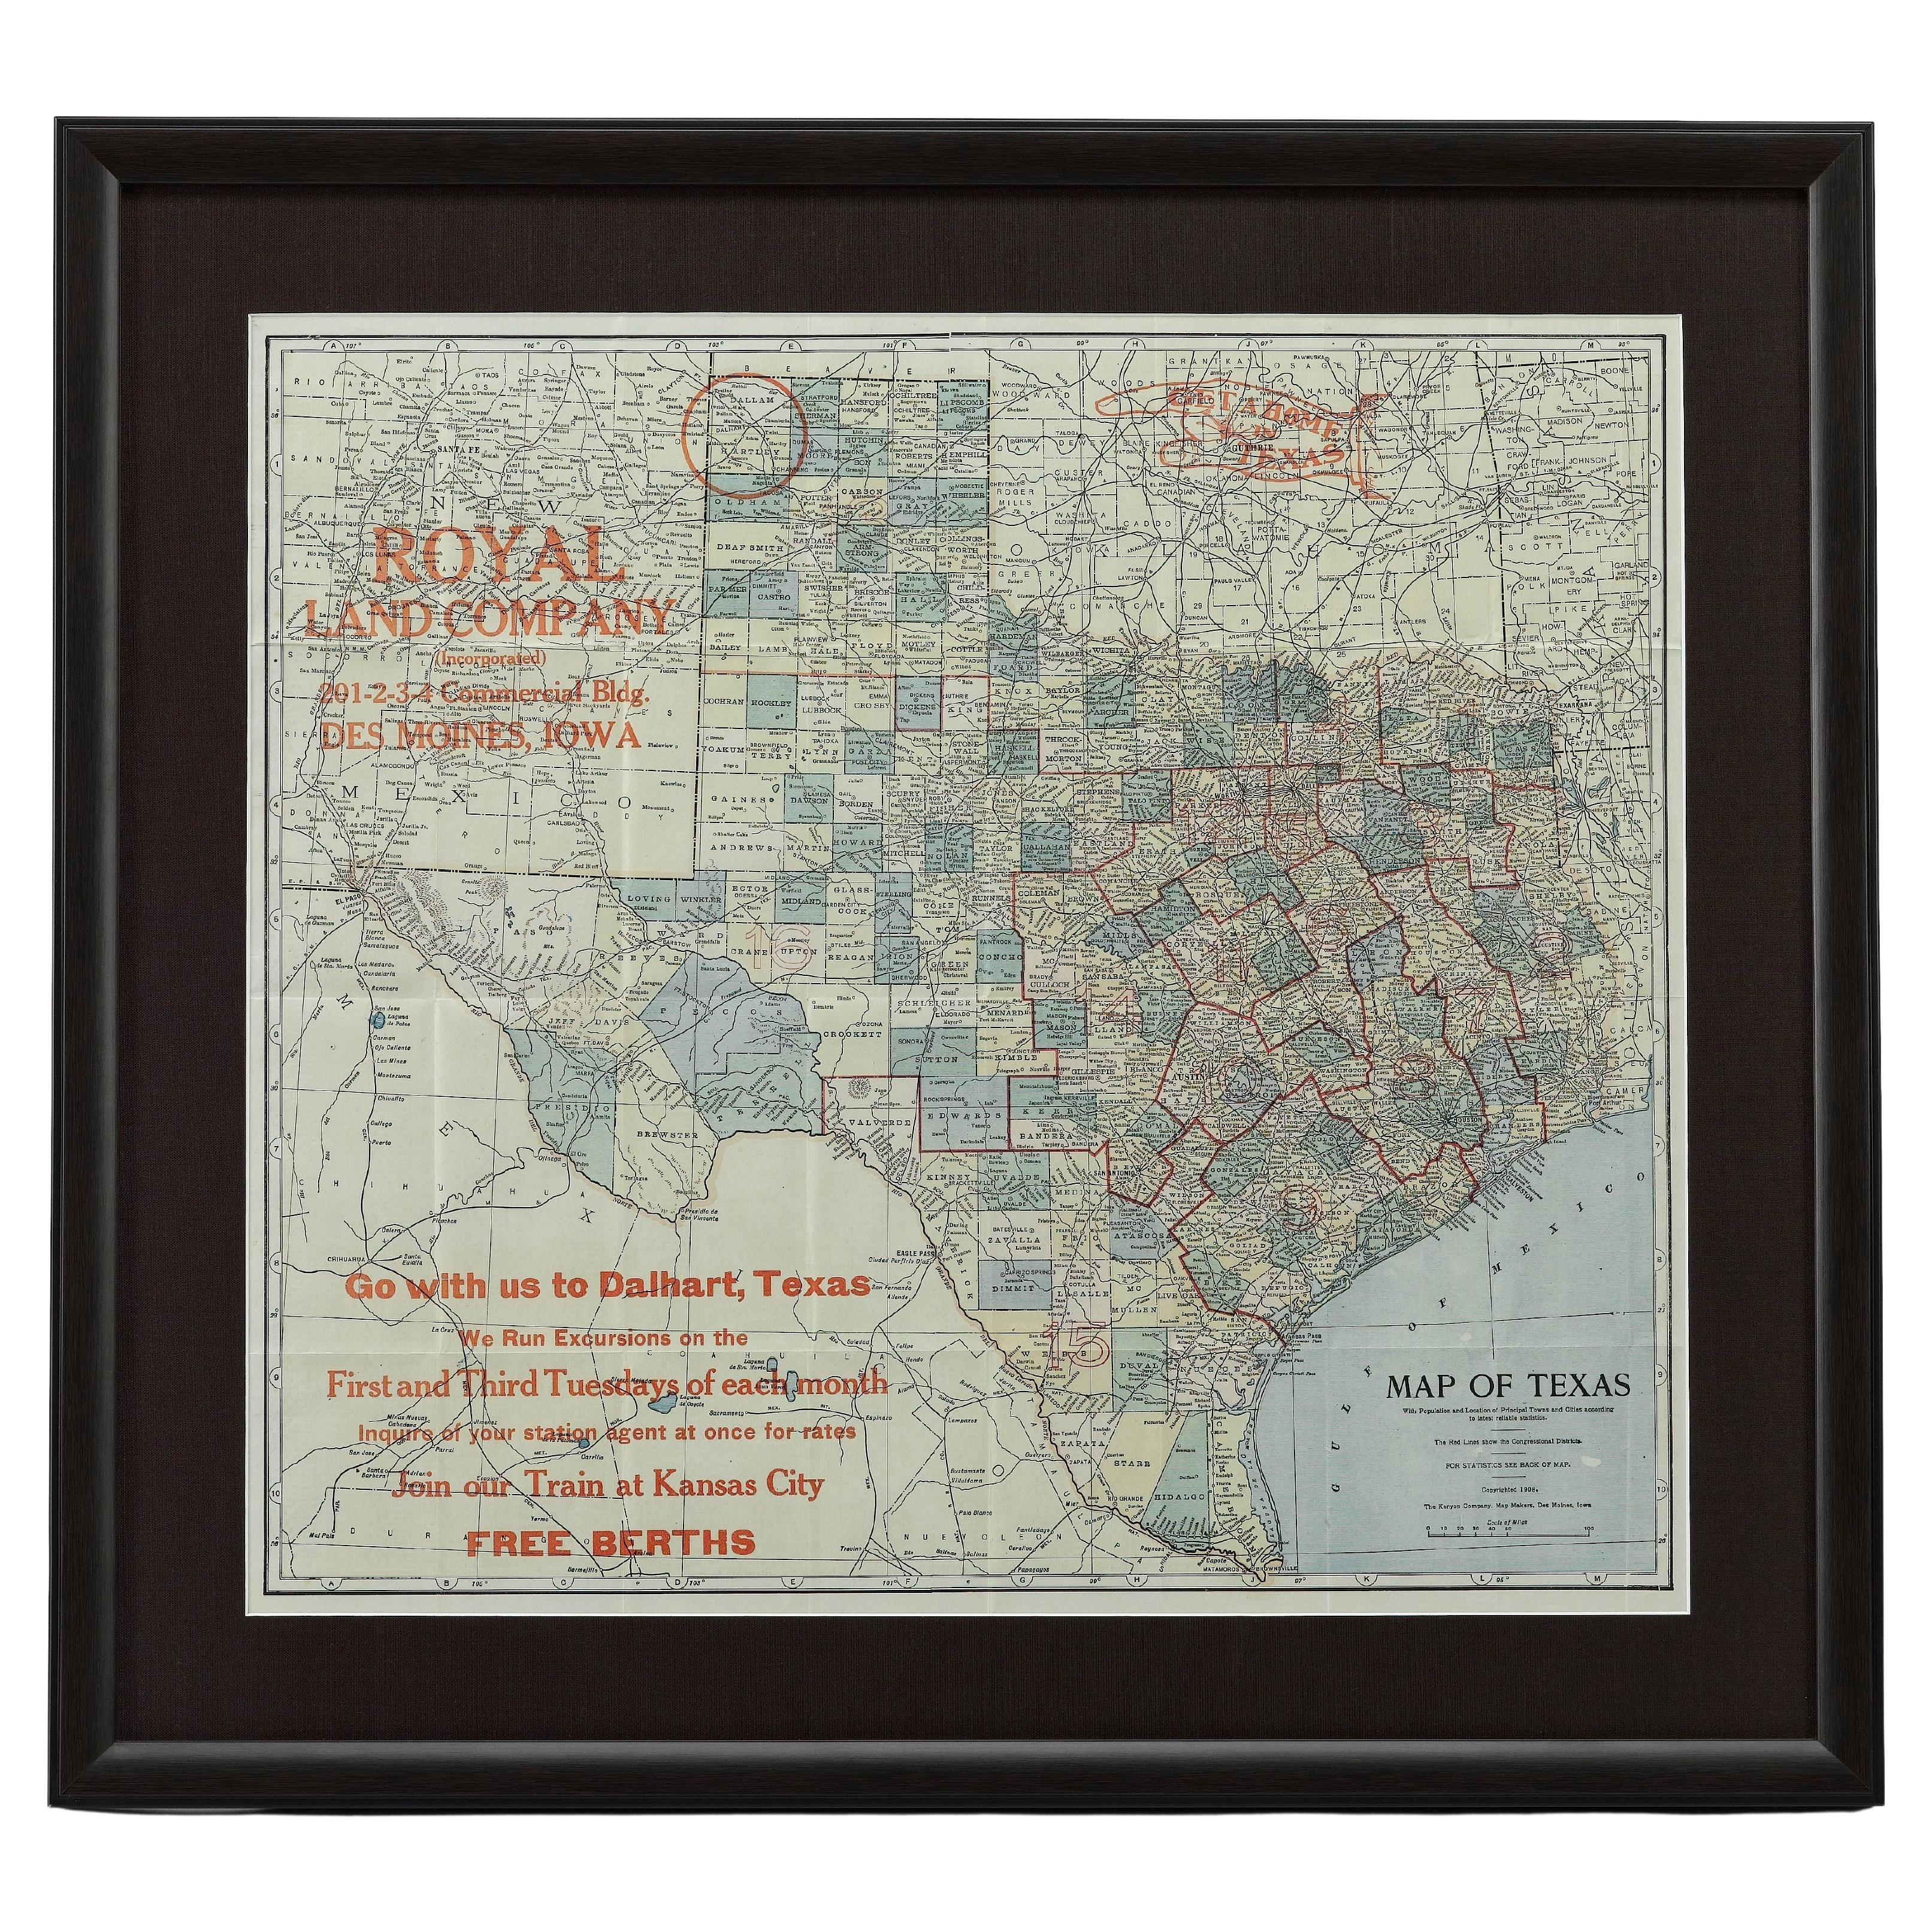 « Map of Texas » de 1908 par The Kenyon Company